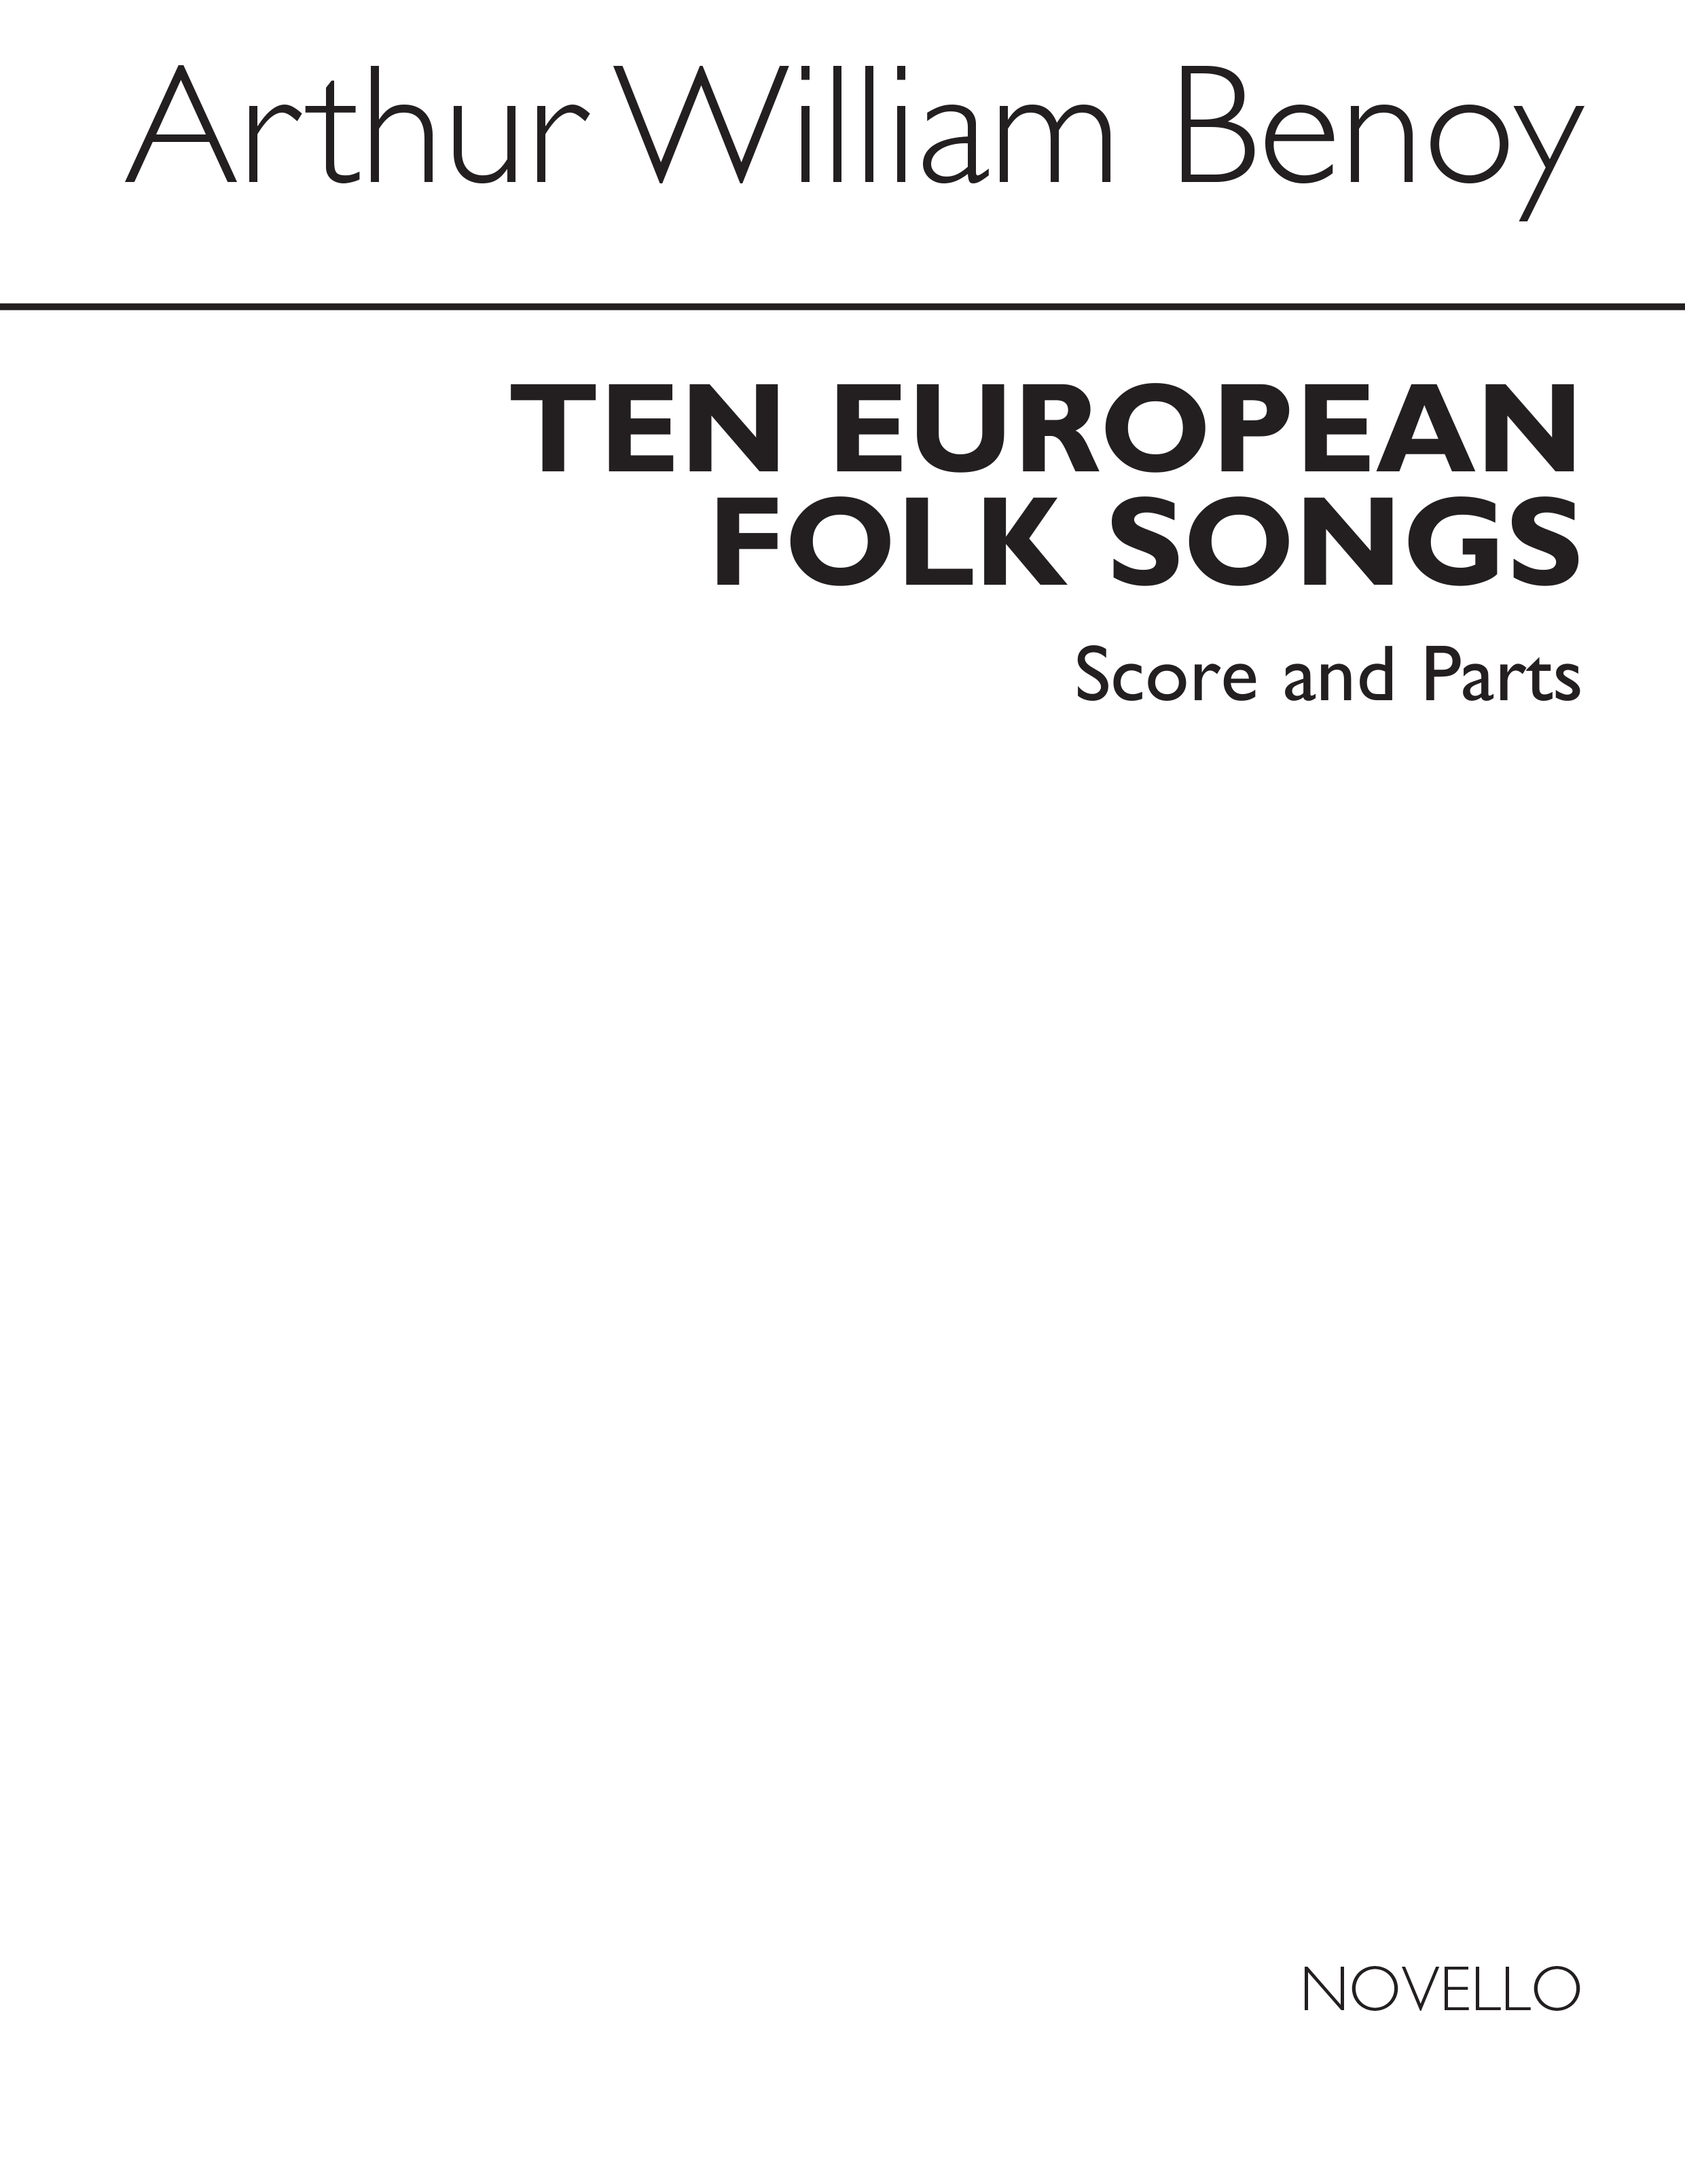 A.W. Benoy: Ten European Folk Songs (Score/Parts)